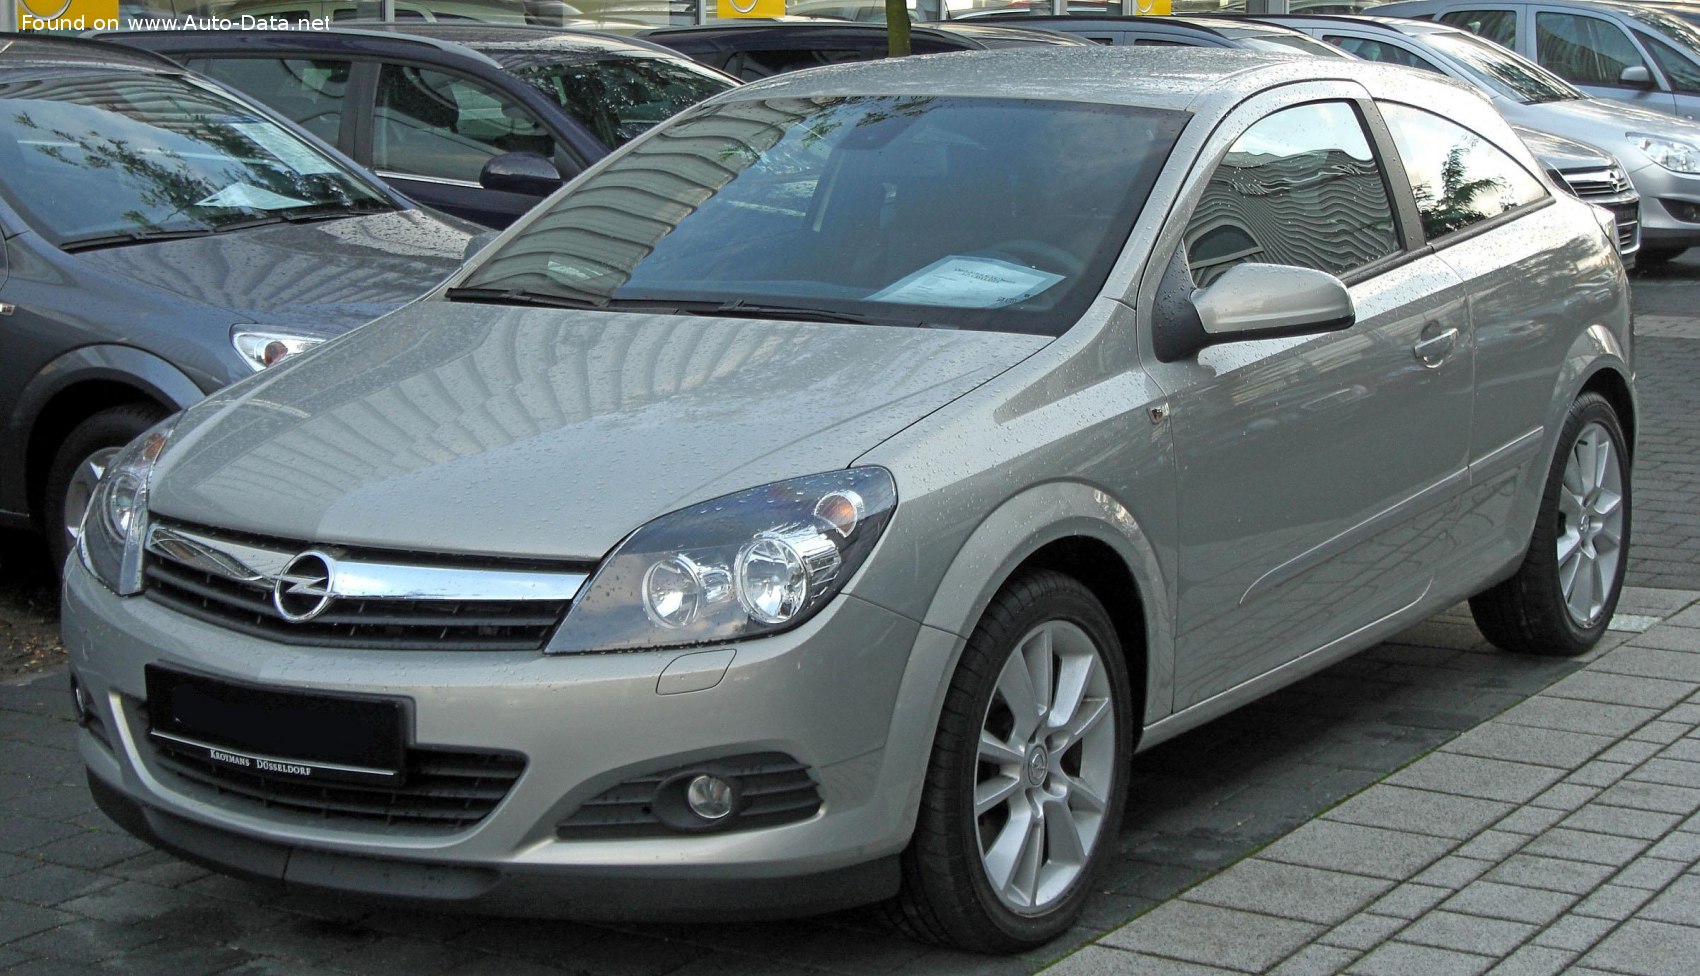 2005 Opel Astra H GTC 1.6i 16V (105 Hp)